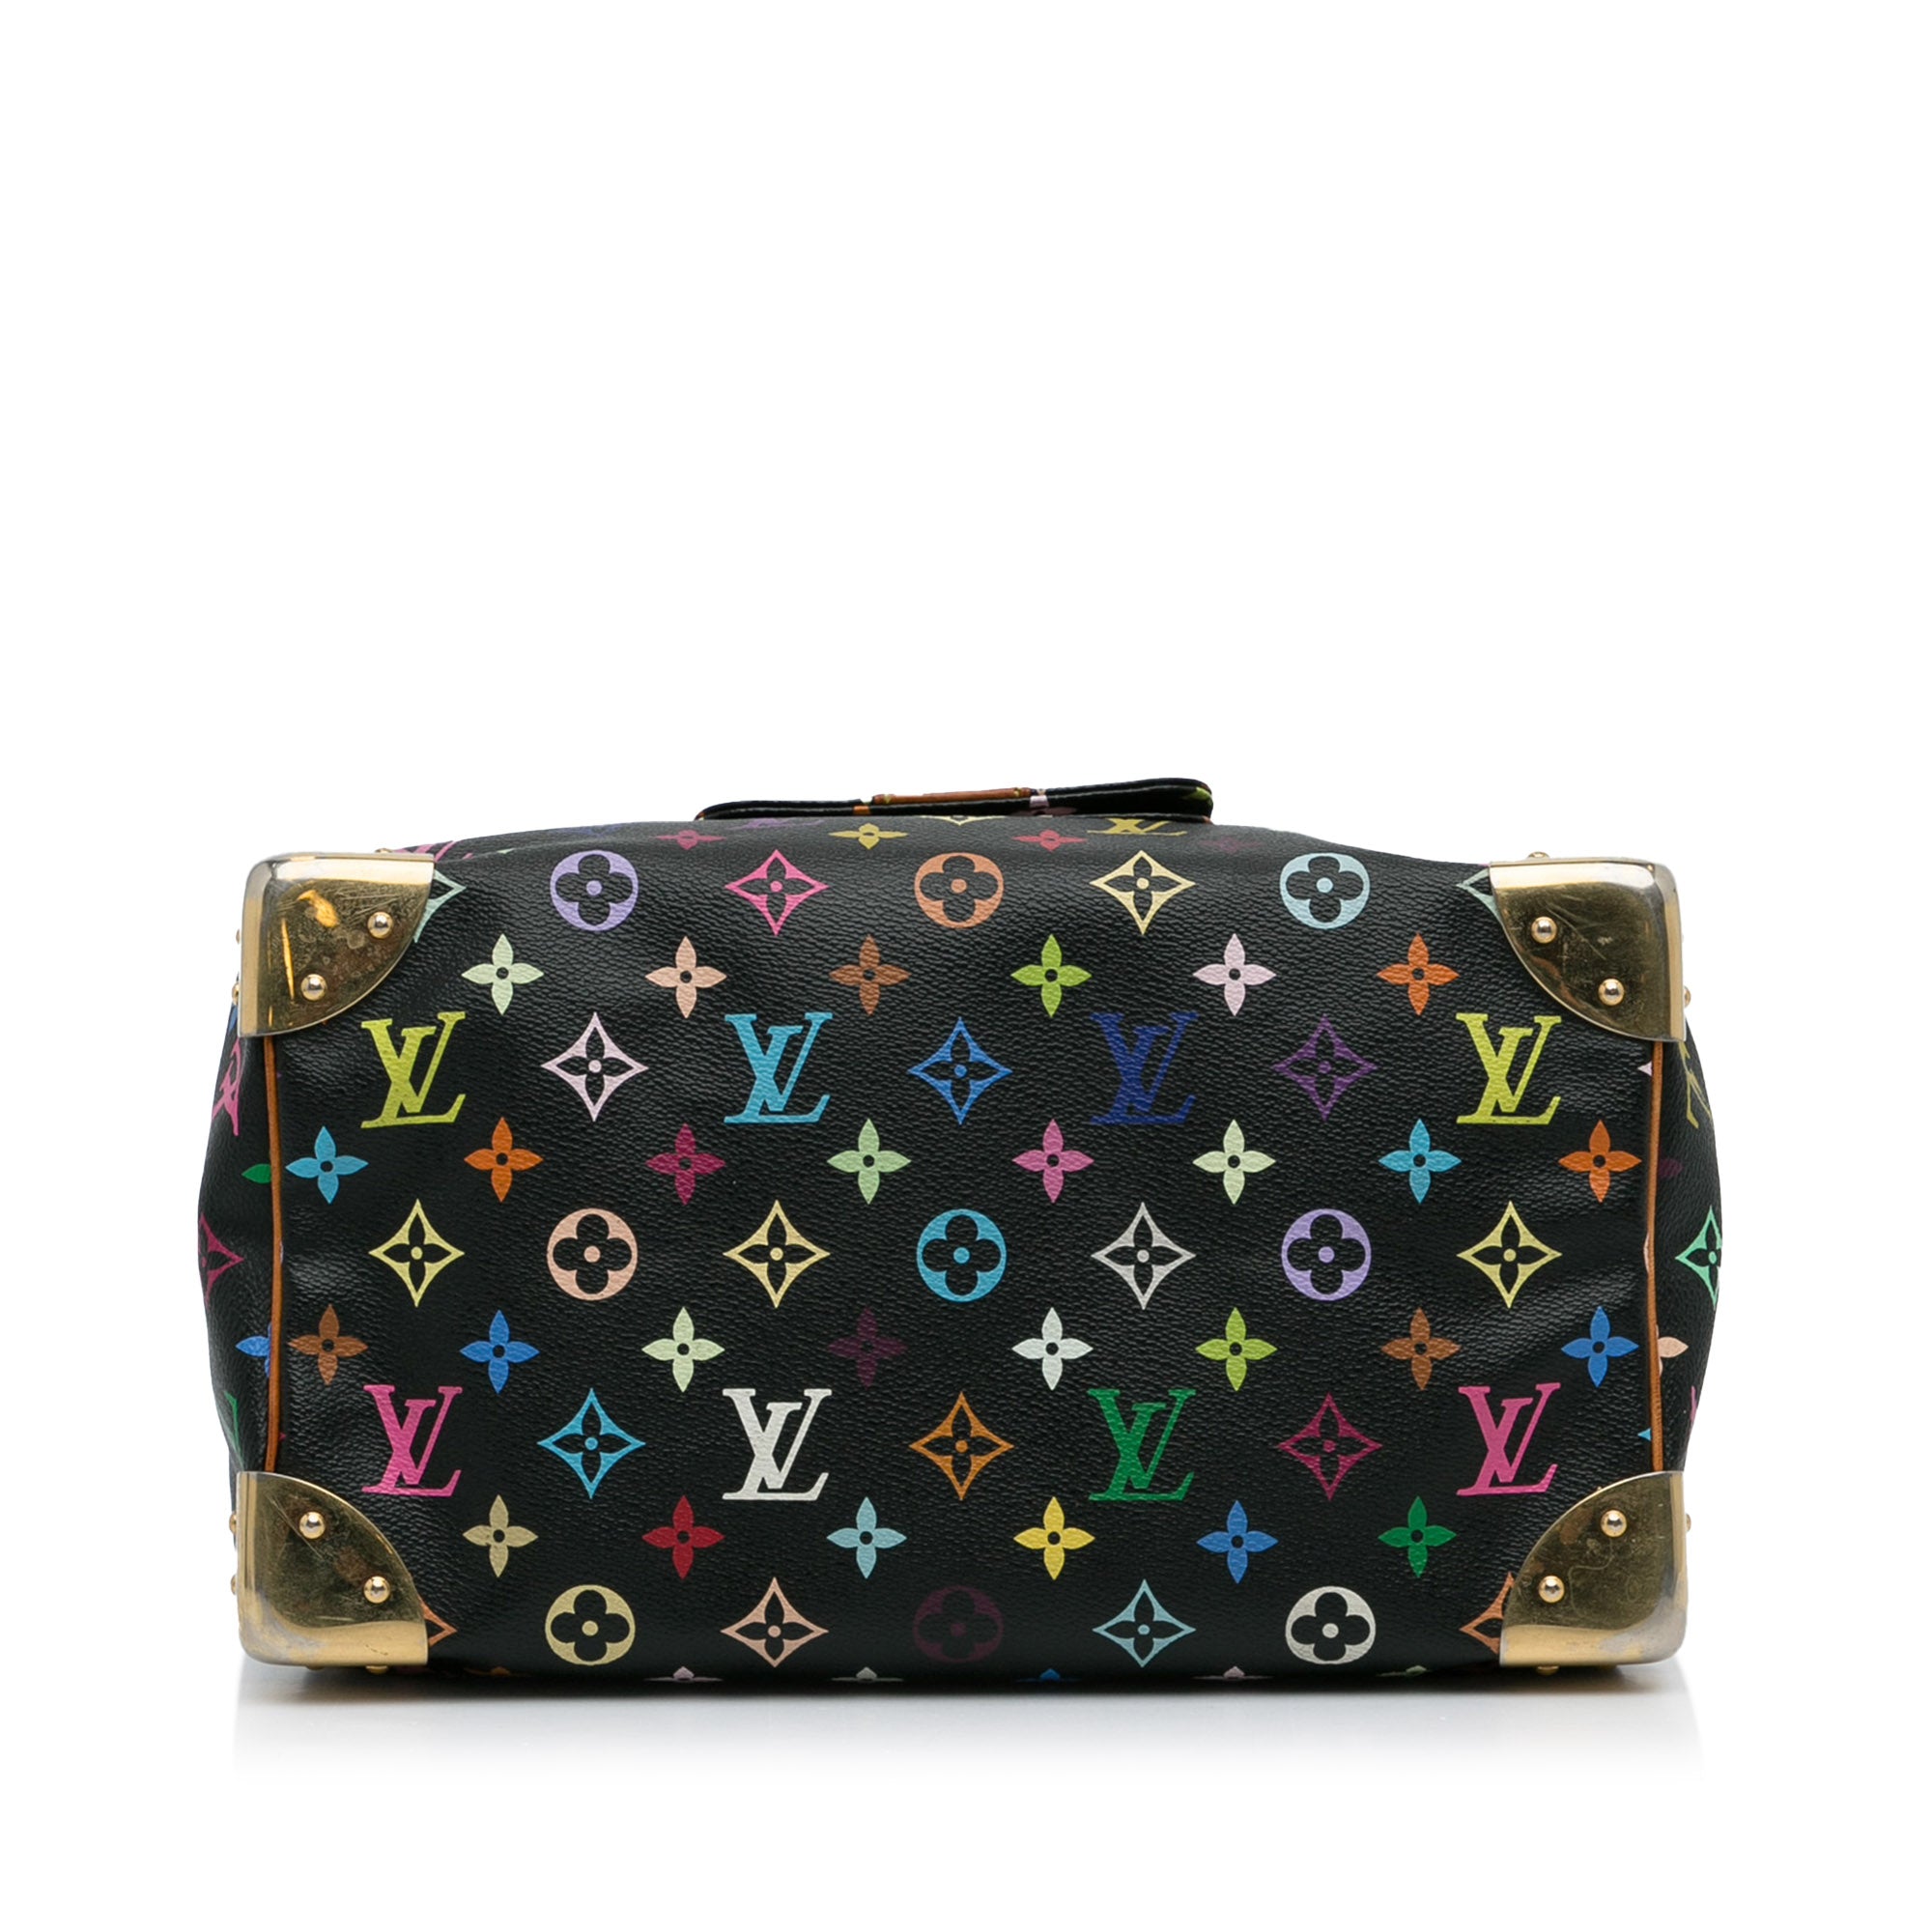 Gucci Boston Bag 1 year update. Alternative to the Louis Vuitton Speedy 